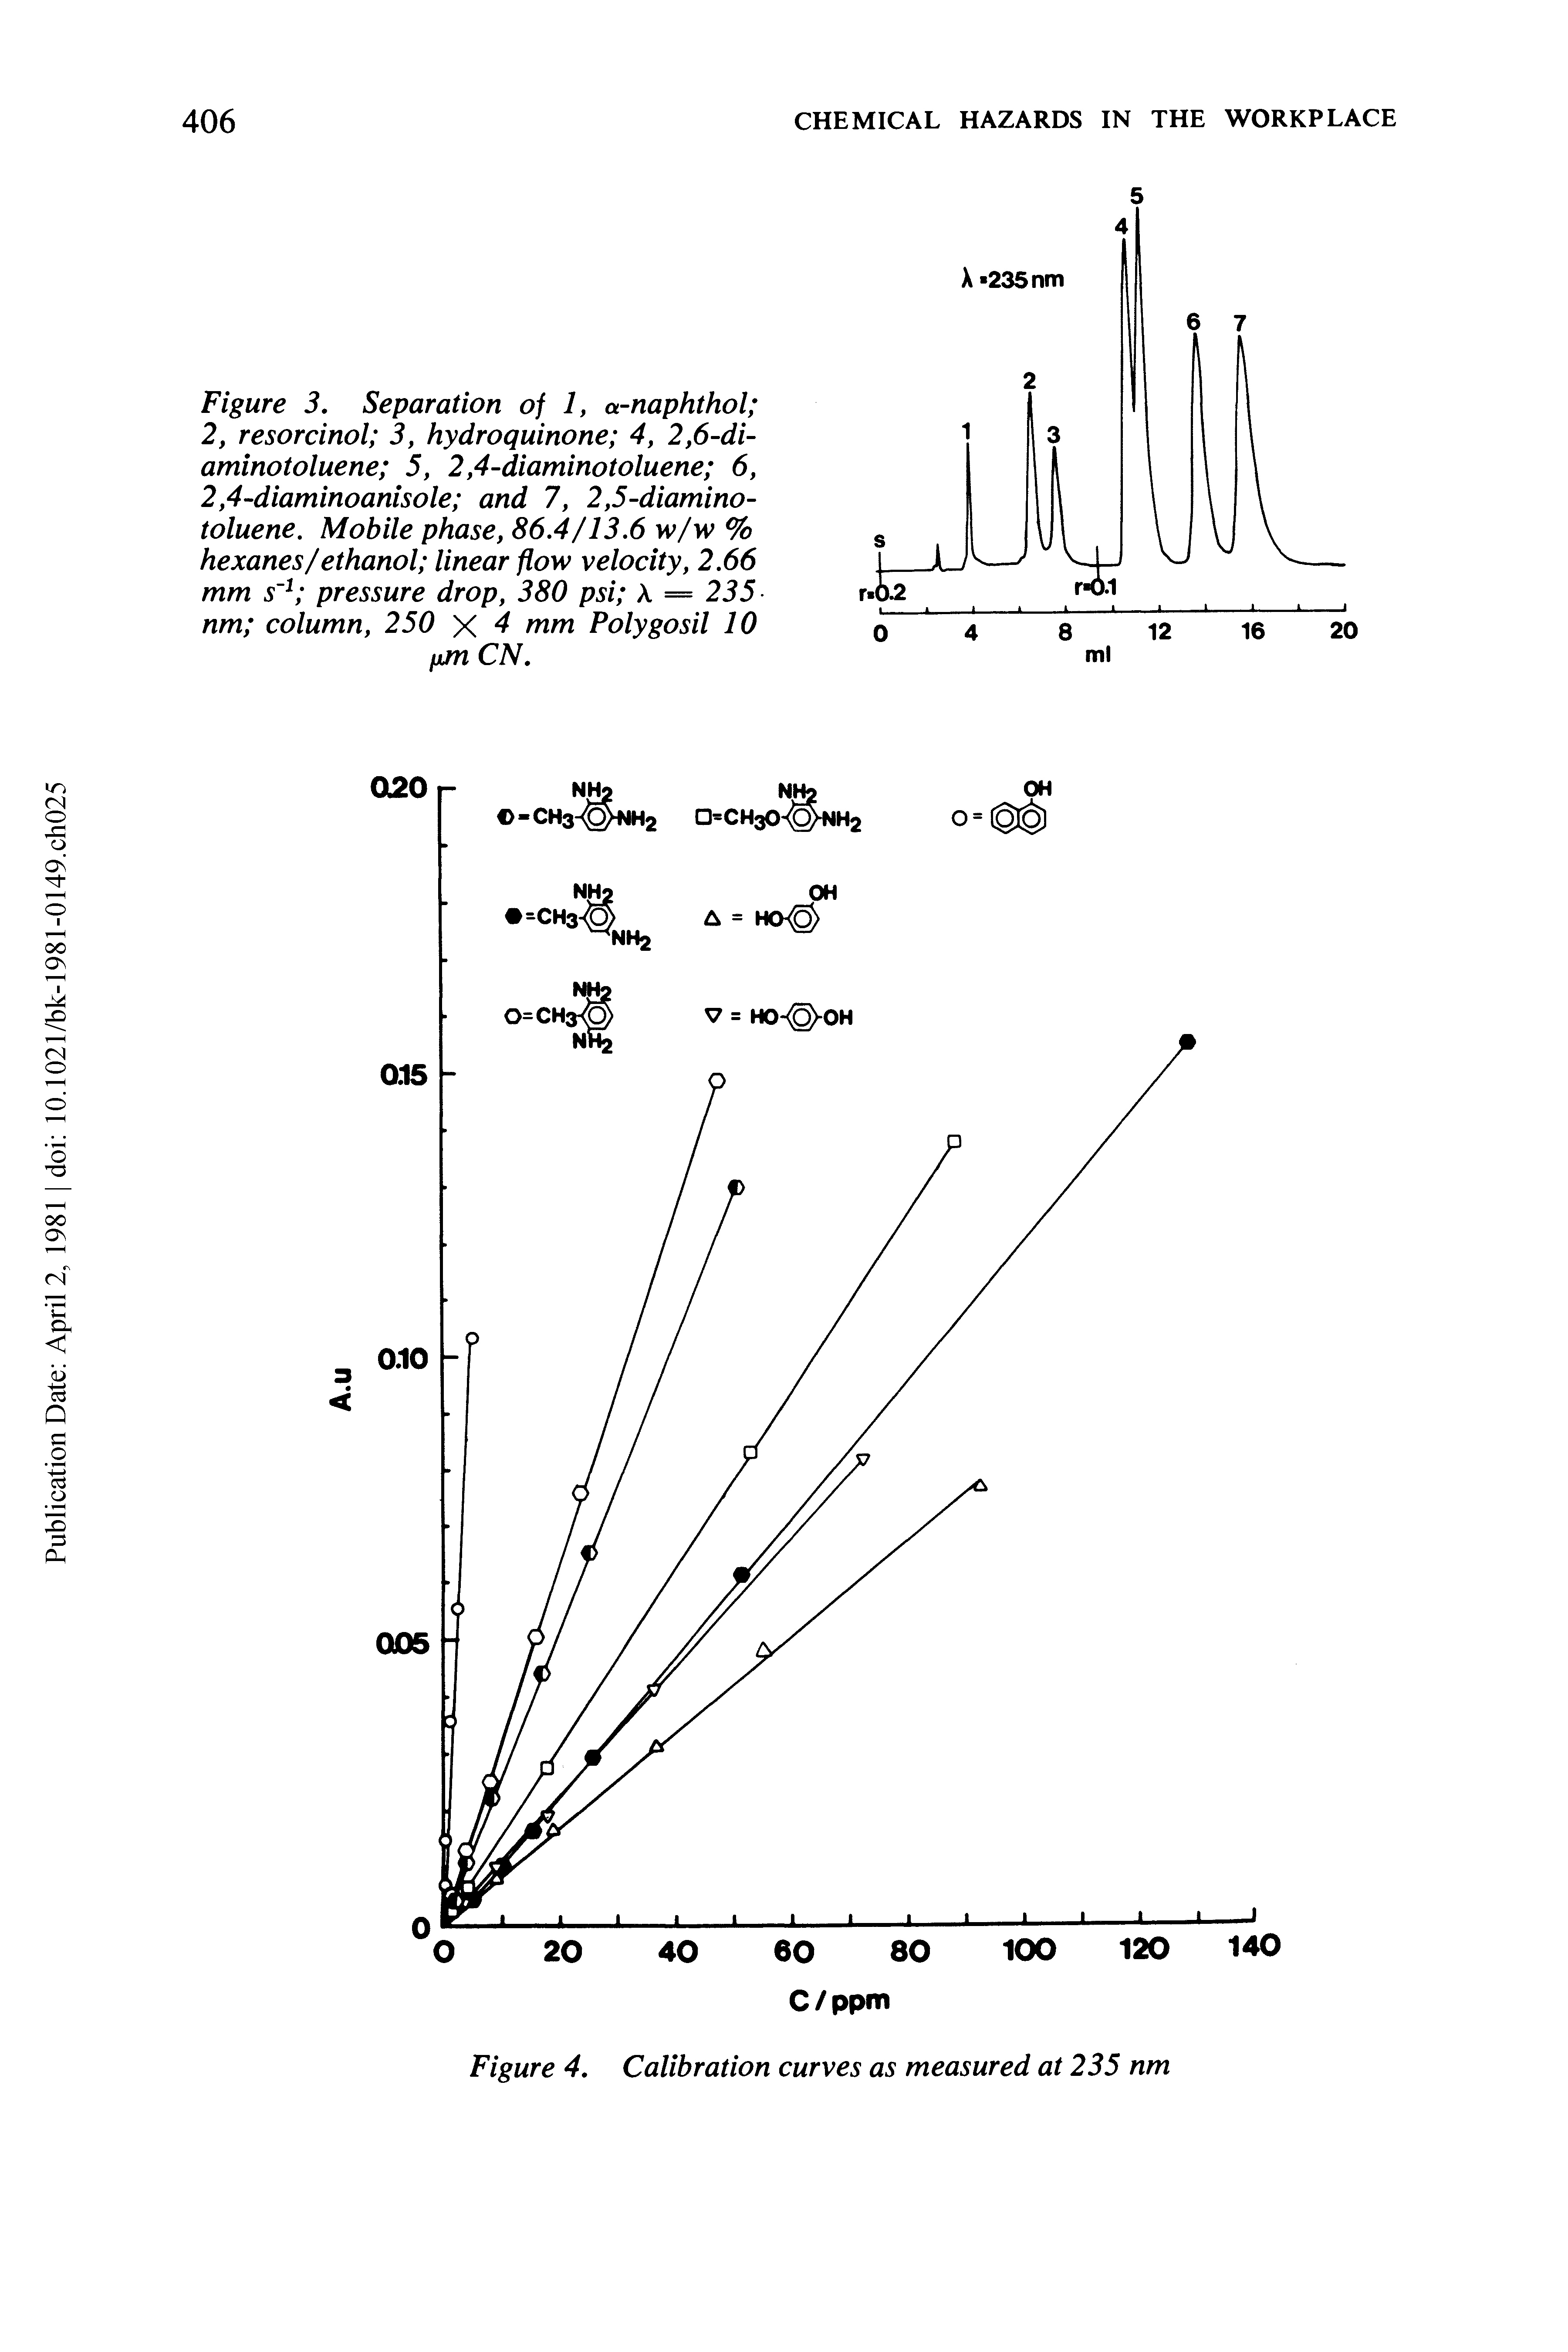 Figure 3. Separation of 1, -naphthol 2, resorcinol 3, hydroquinone 4, 2,6-di-aminotoluene 5, 2,4-diaminotoluene 6, 2,4-diaminoanisole and 7, 2,5-diamino-toluene. Mobile phase, 86.4/13.6 w/w % hexanes/ethanol linear flow velocity, 2.66 mm s 1 pressure drop, 380 psi X = 235 nm column, 250 X 4 mm Polygosil 10 fjjn CN.